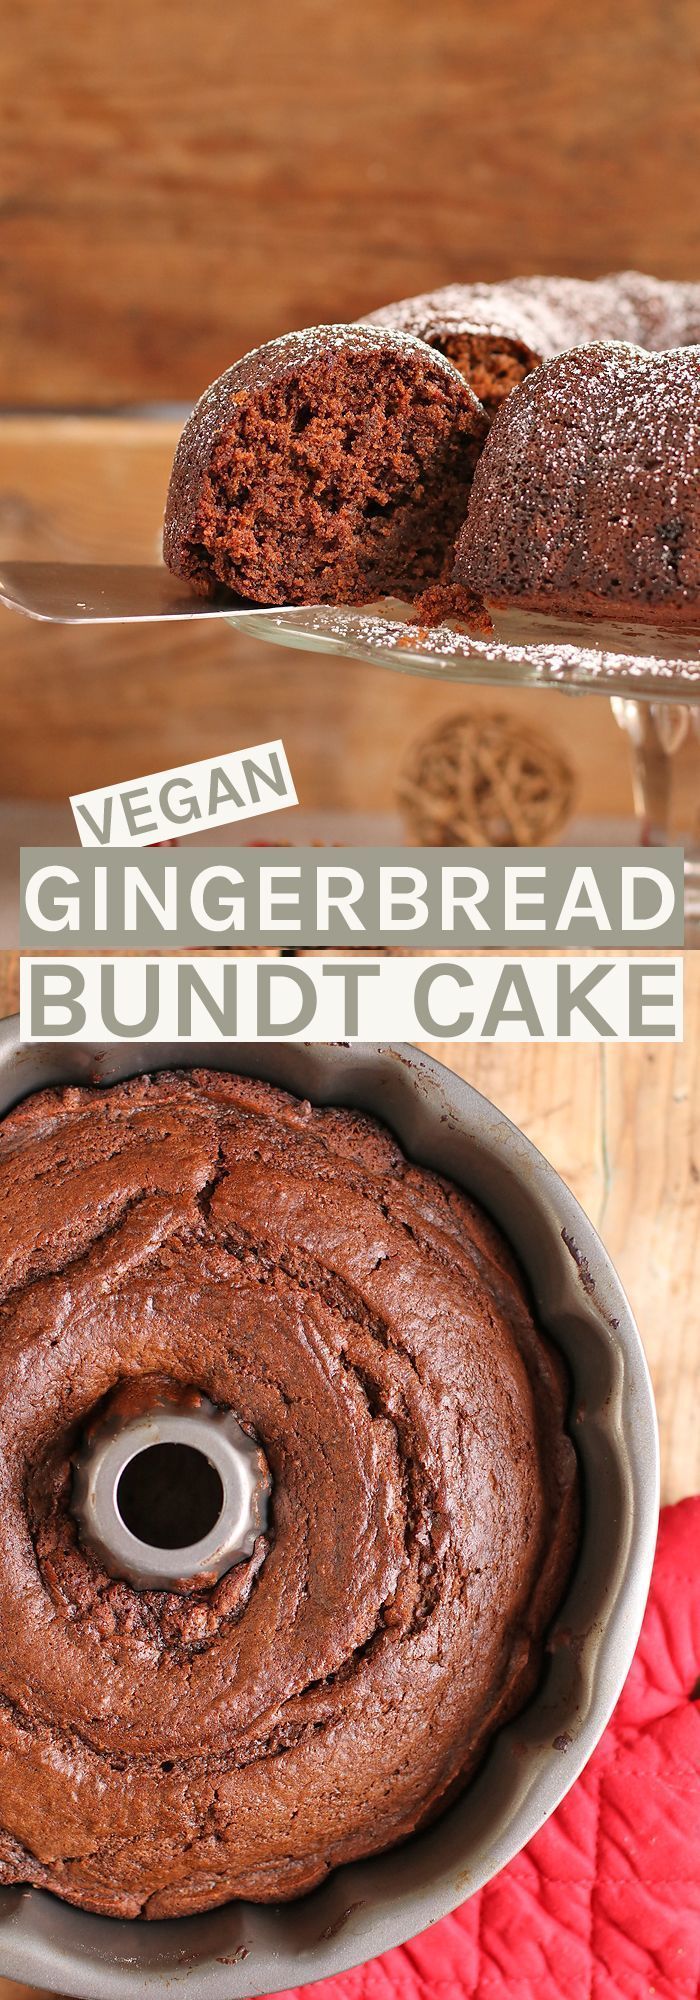 21 vegan recipes cake
 ideas